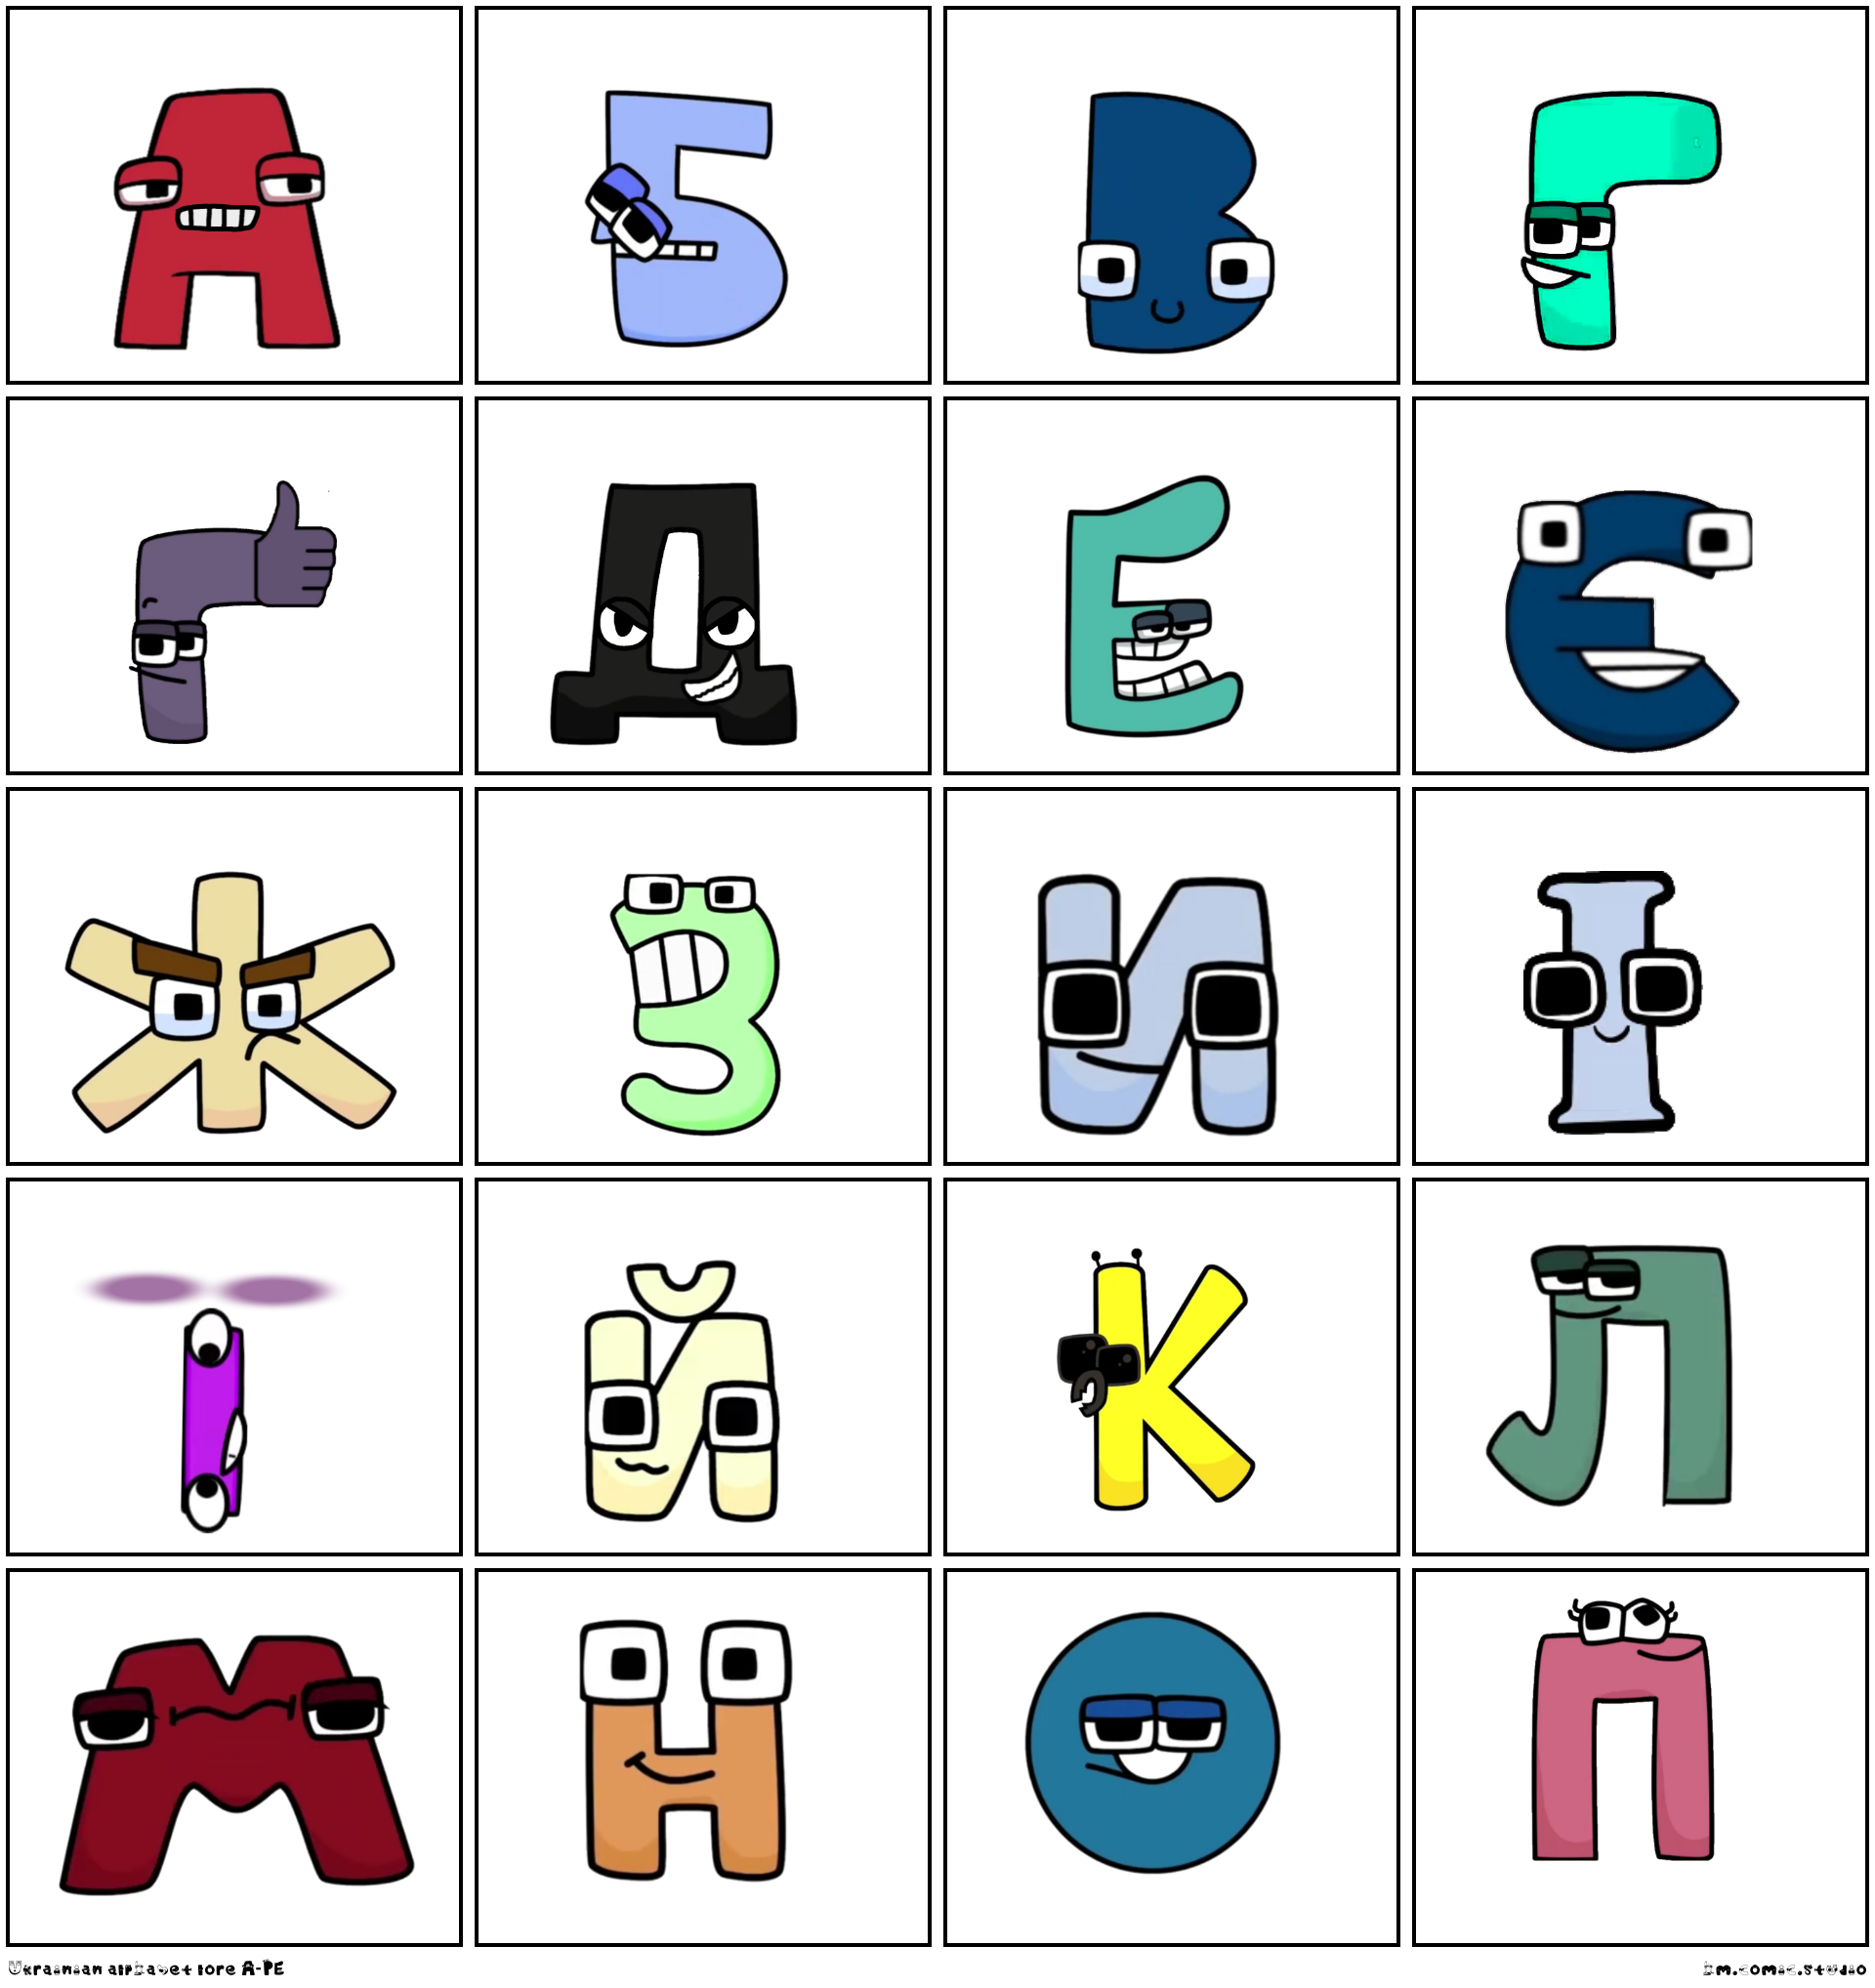 Ukrainian alphabet lore (А-Г) credit:pauloluigi - Comic Studio